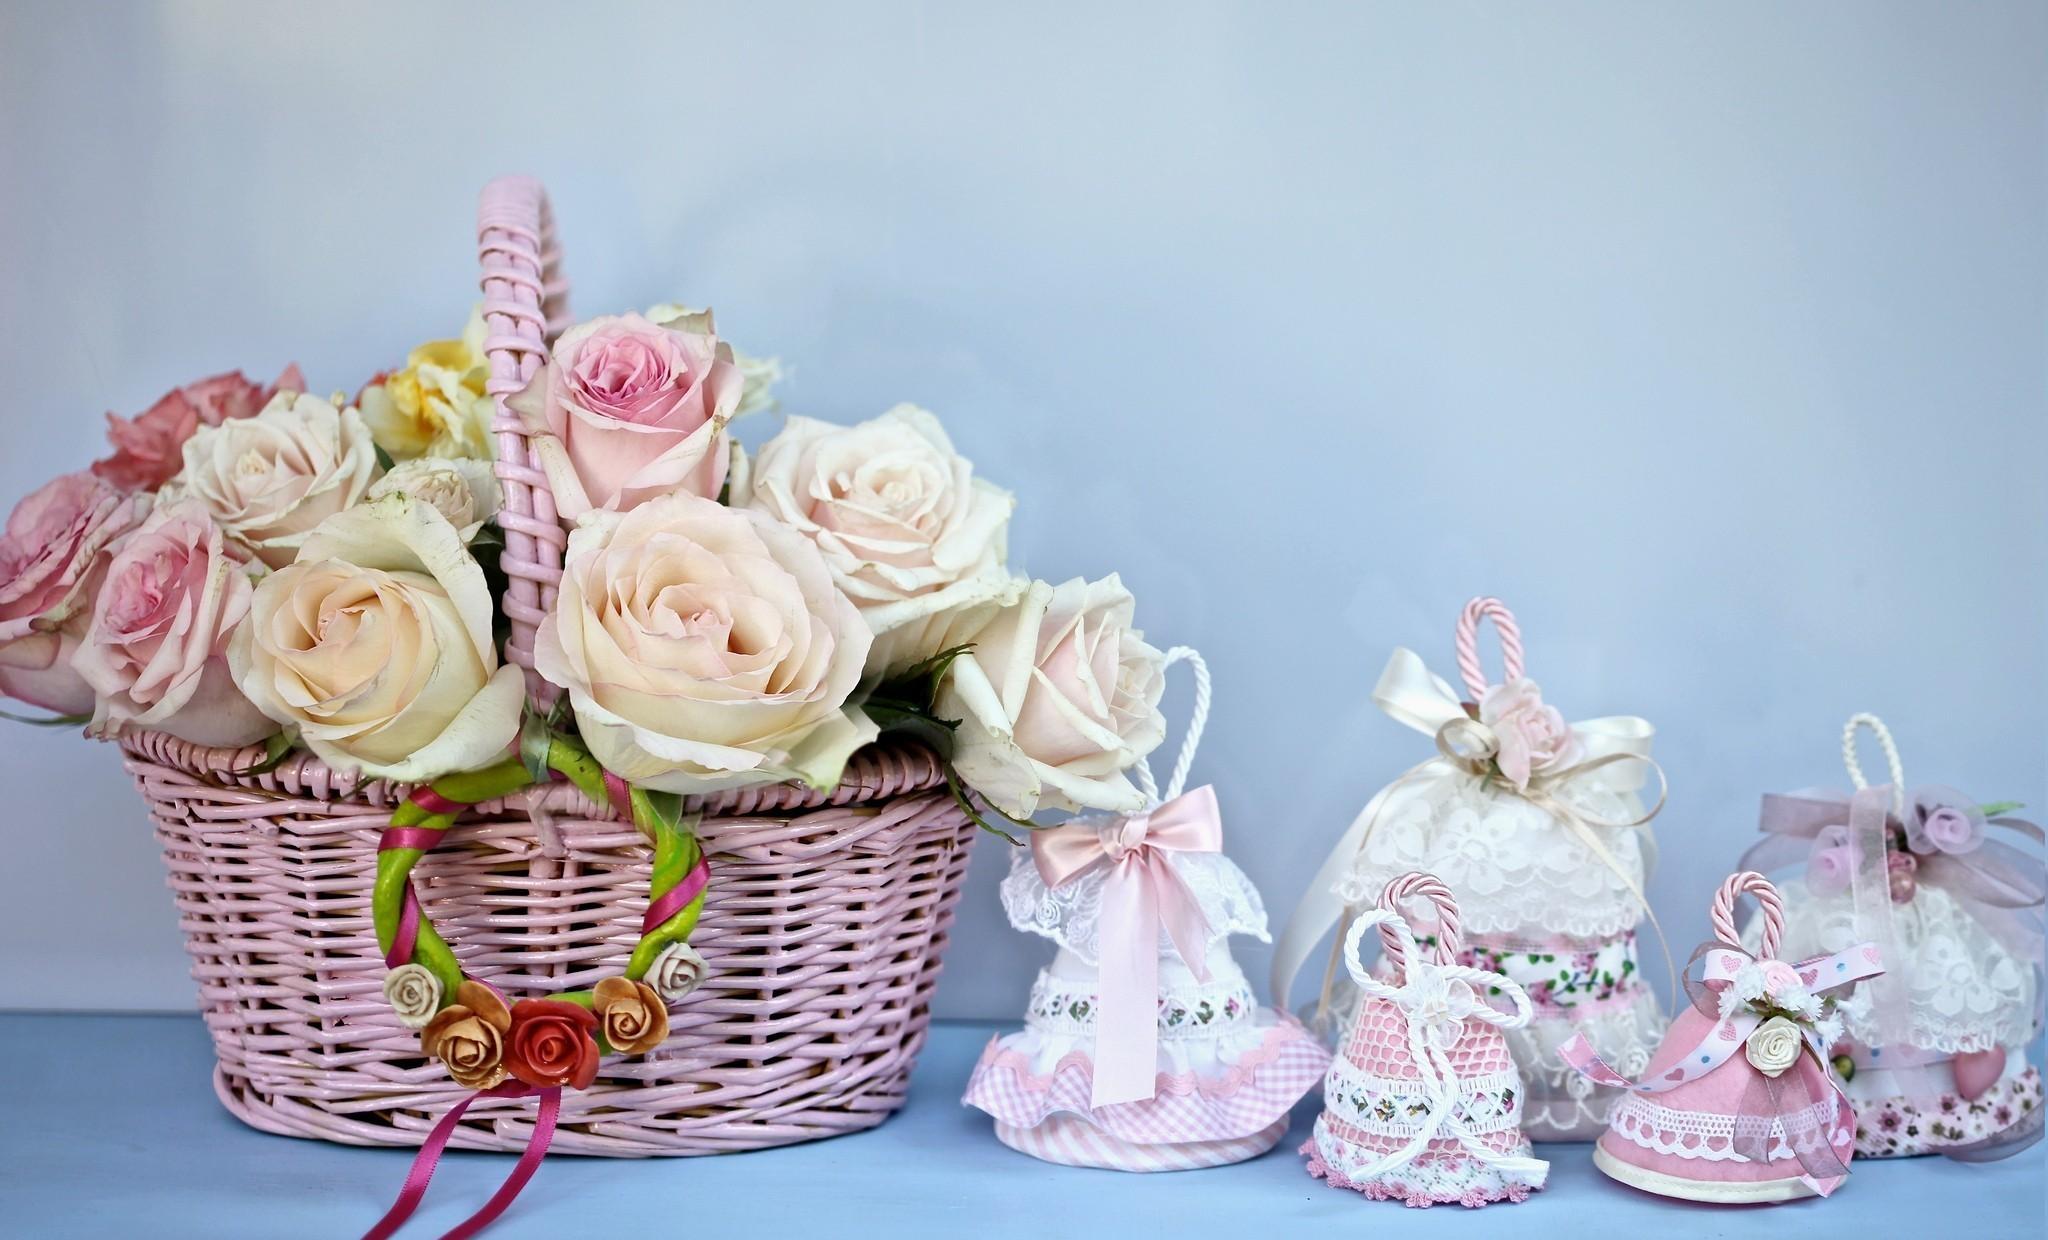 Free HD flowers, roses, bluebells, basket, bows